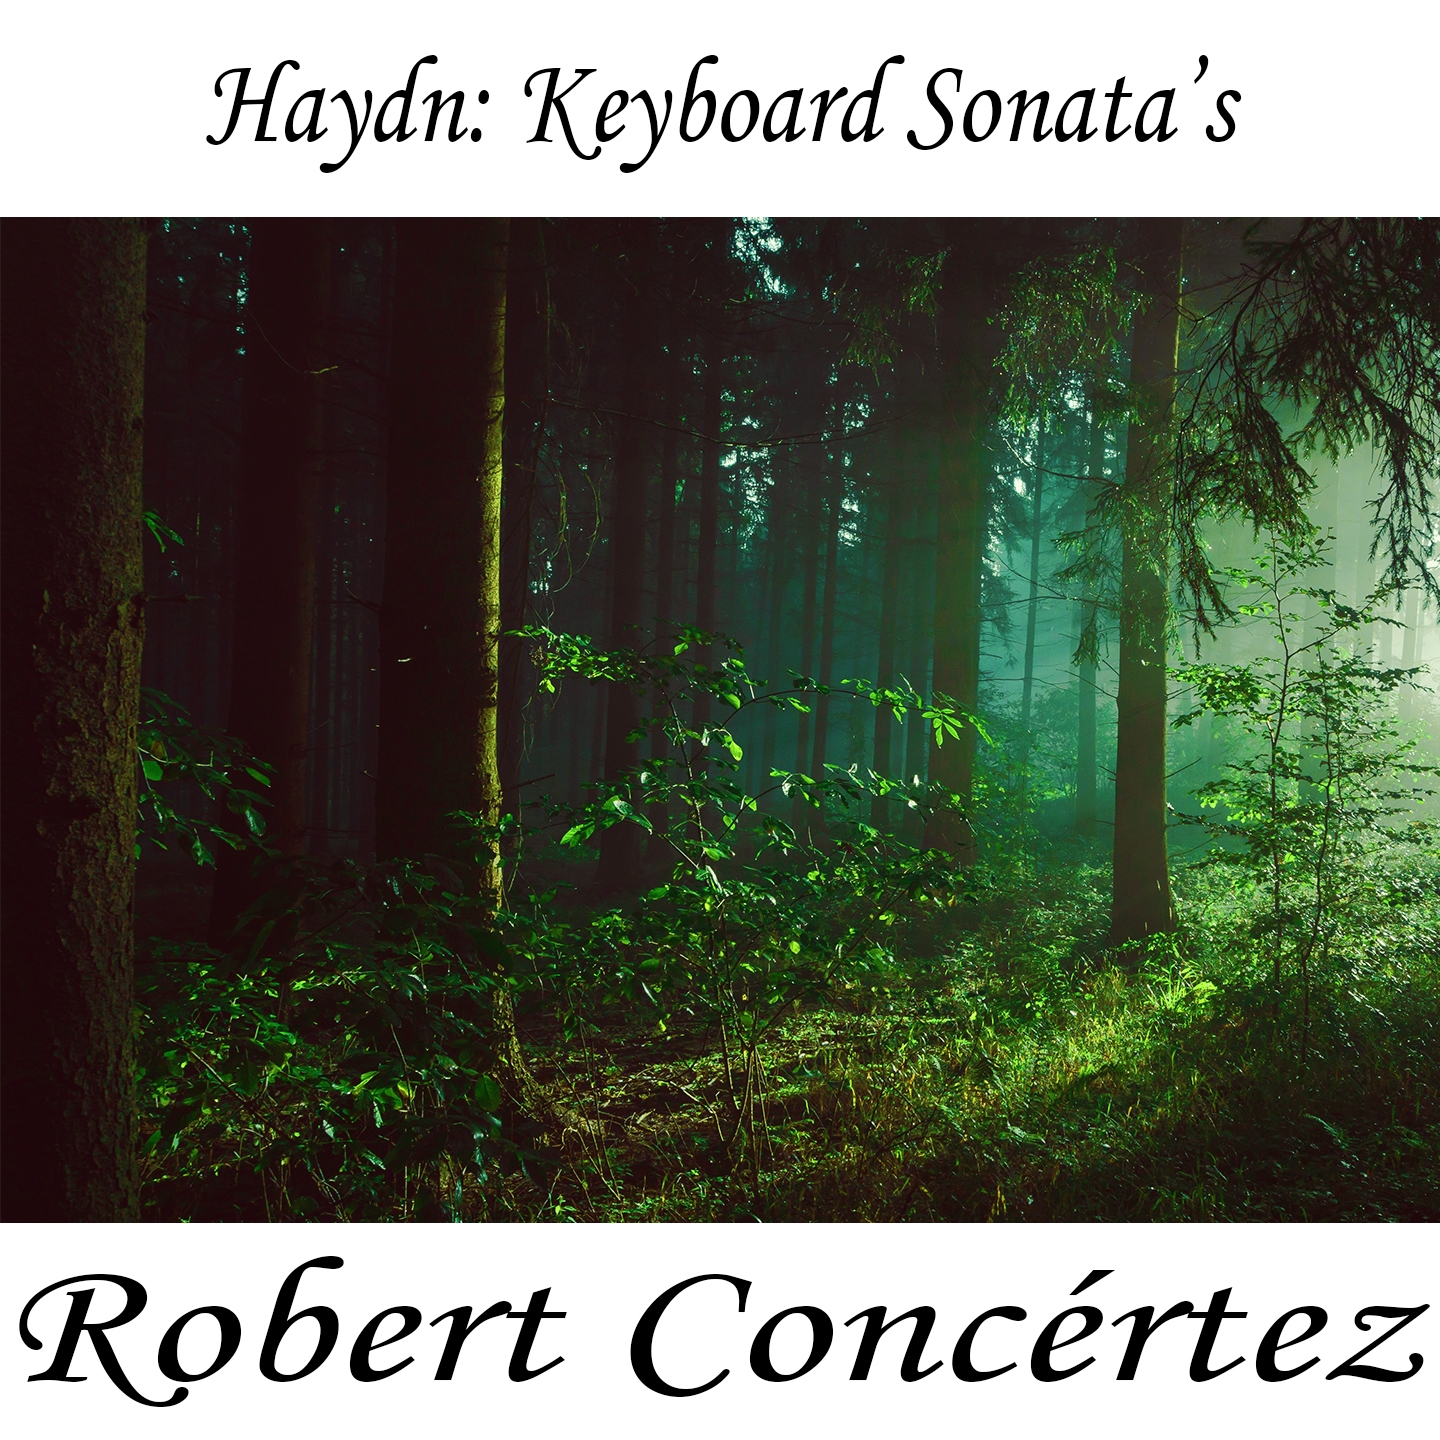 Haydn: Keyboard Sonata's